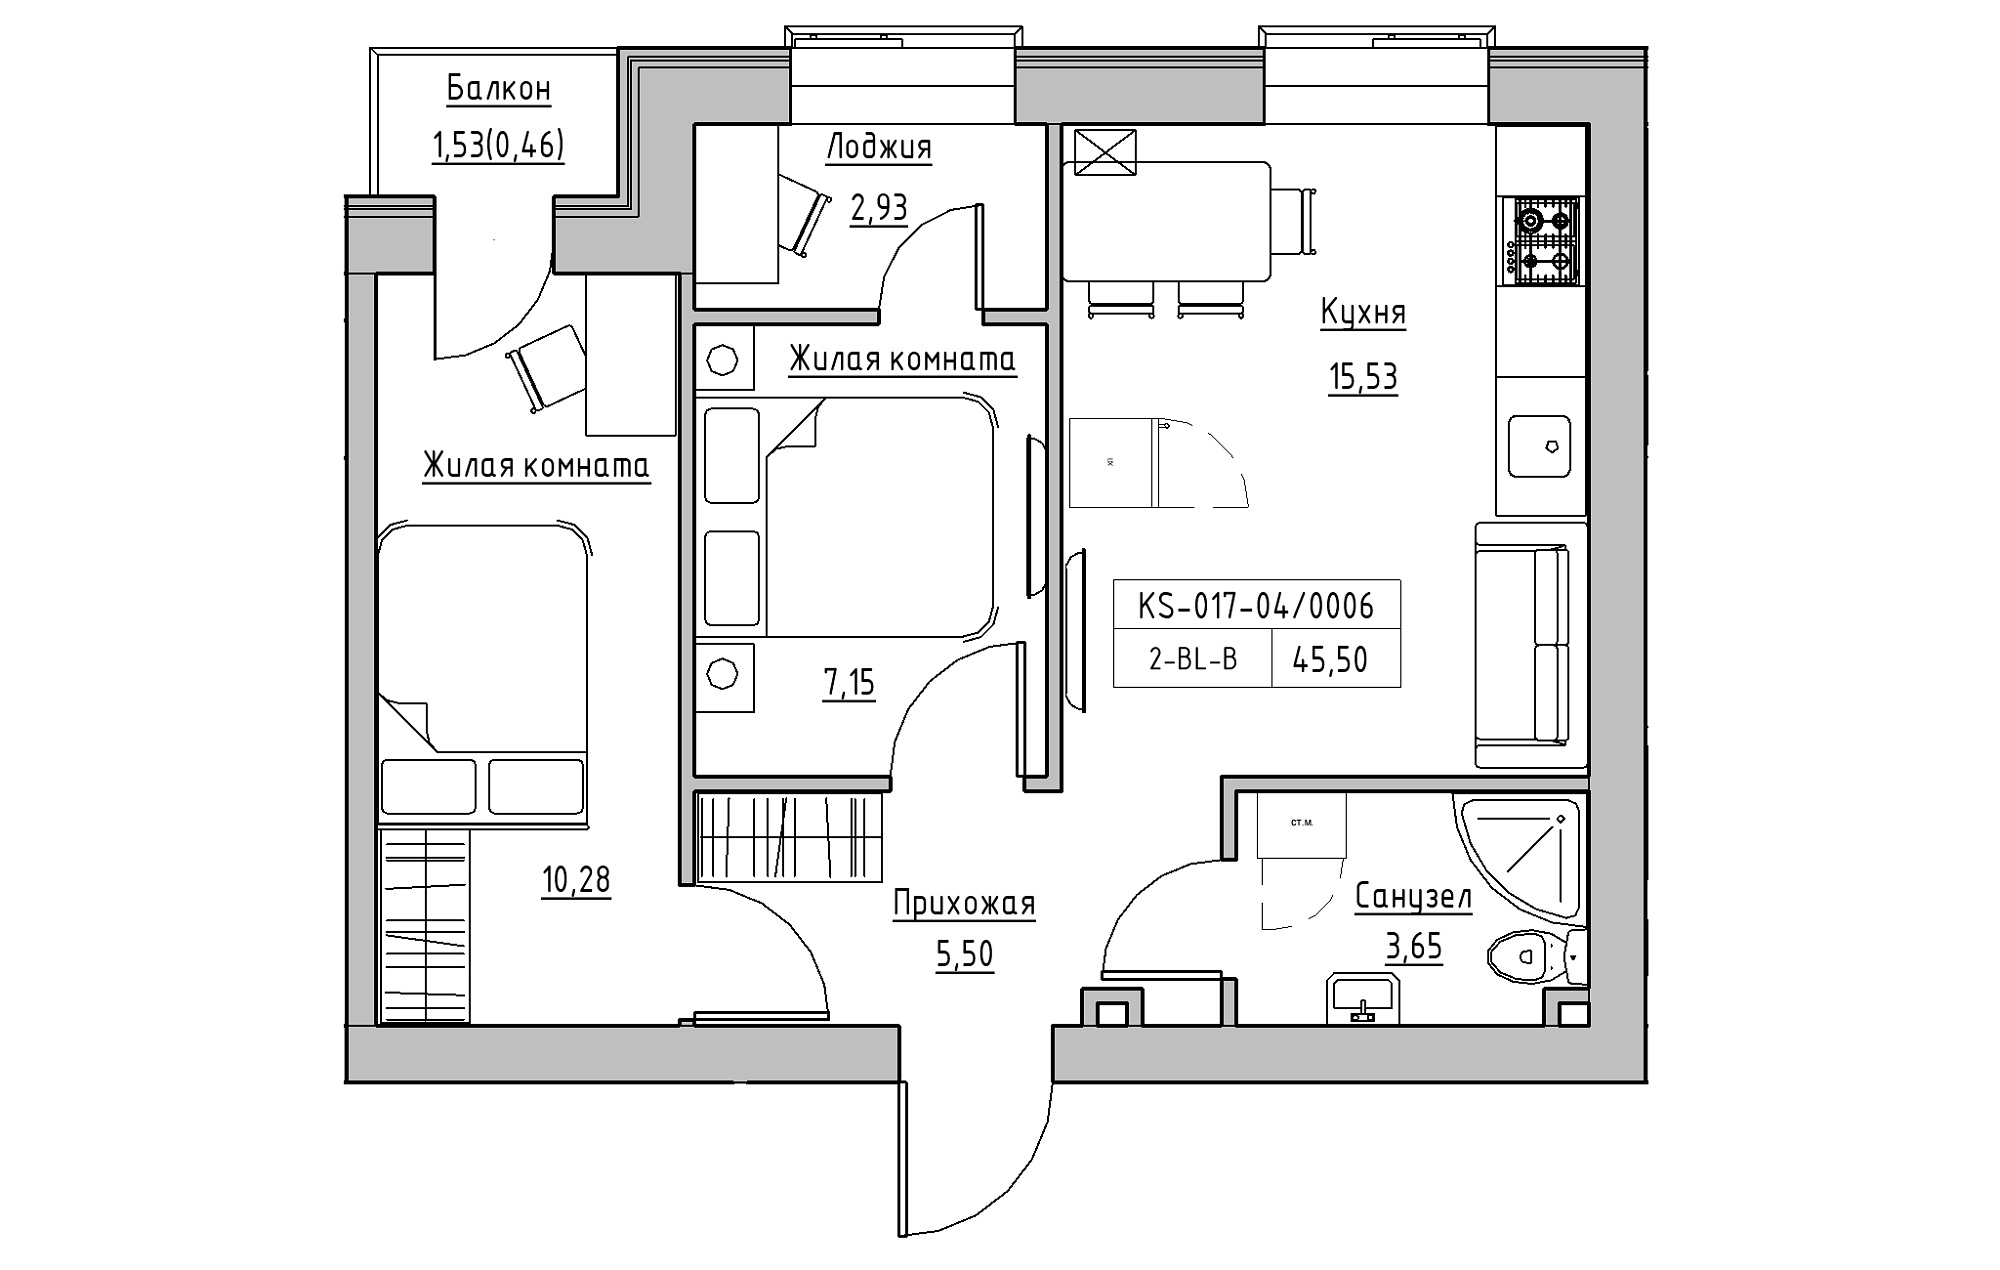 Planning 2-rm flats area 45.5m2, KS-017-04/0006.